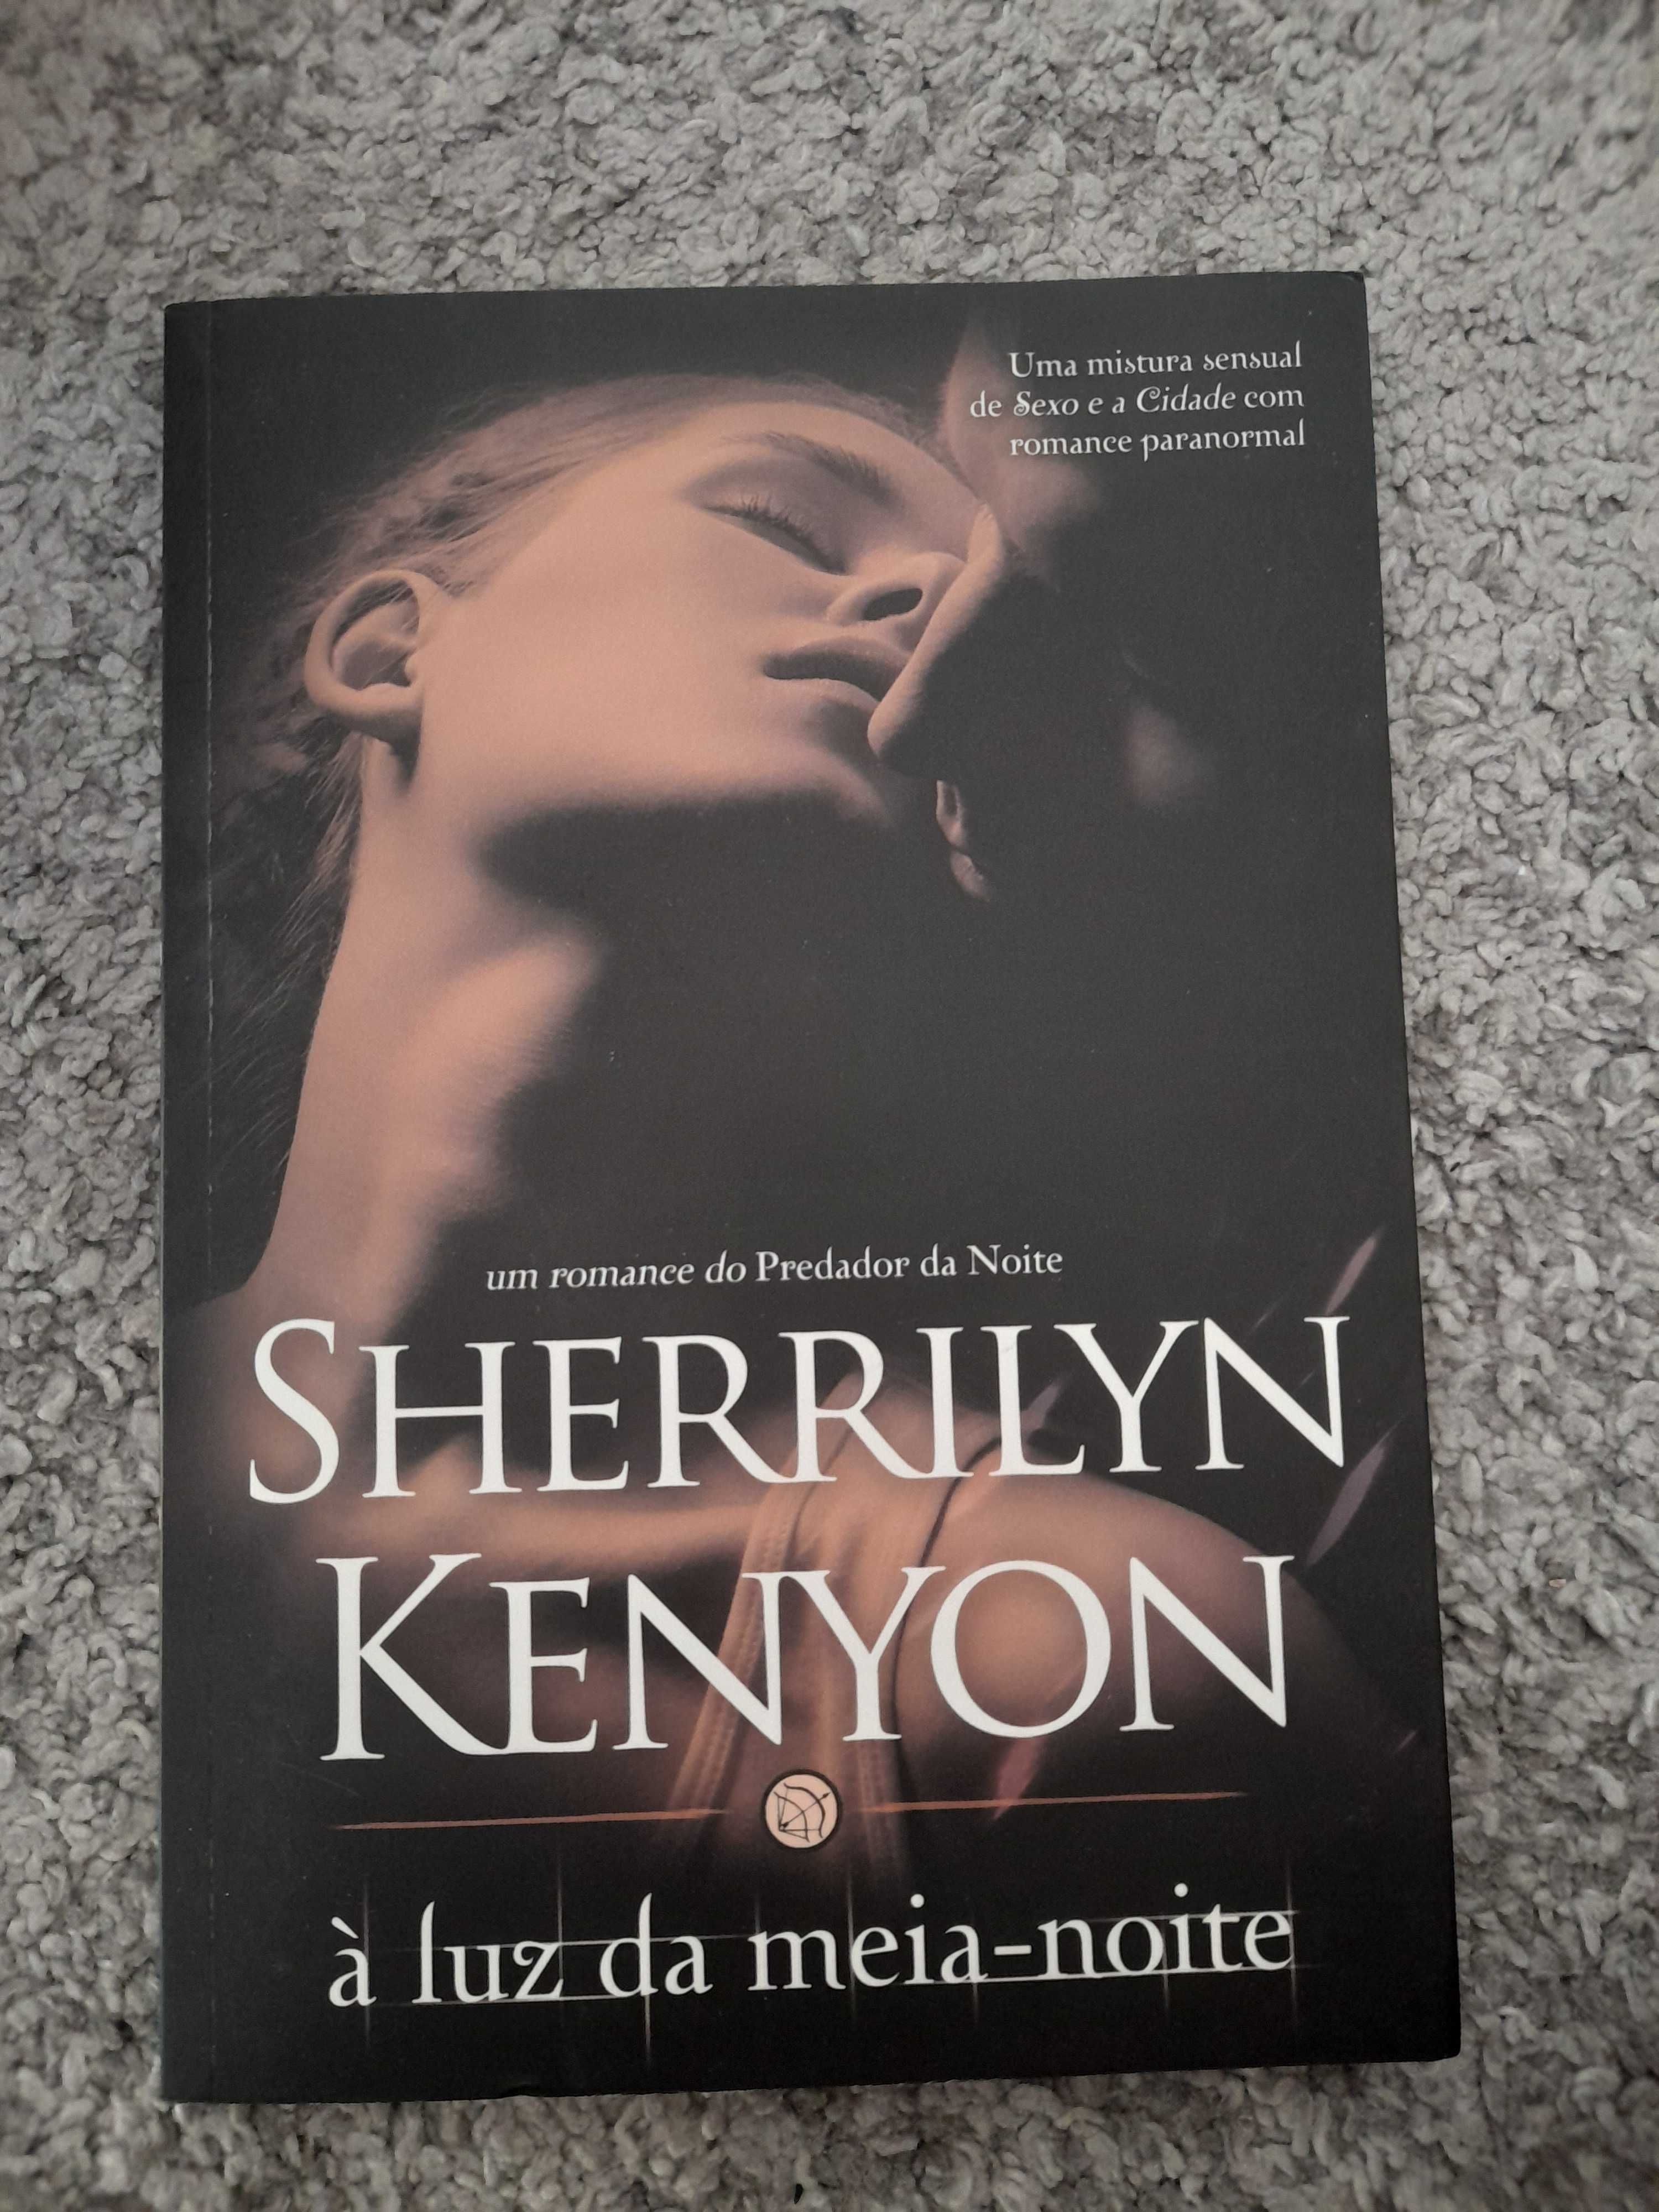 Livro "À Luz da Meia-Noite" de Sherrilyn Kenyon